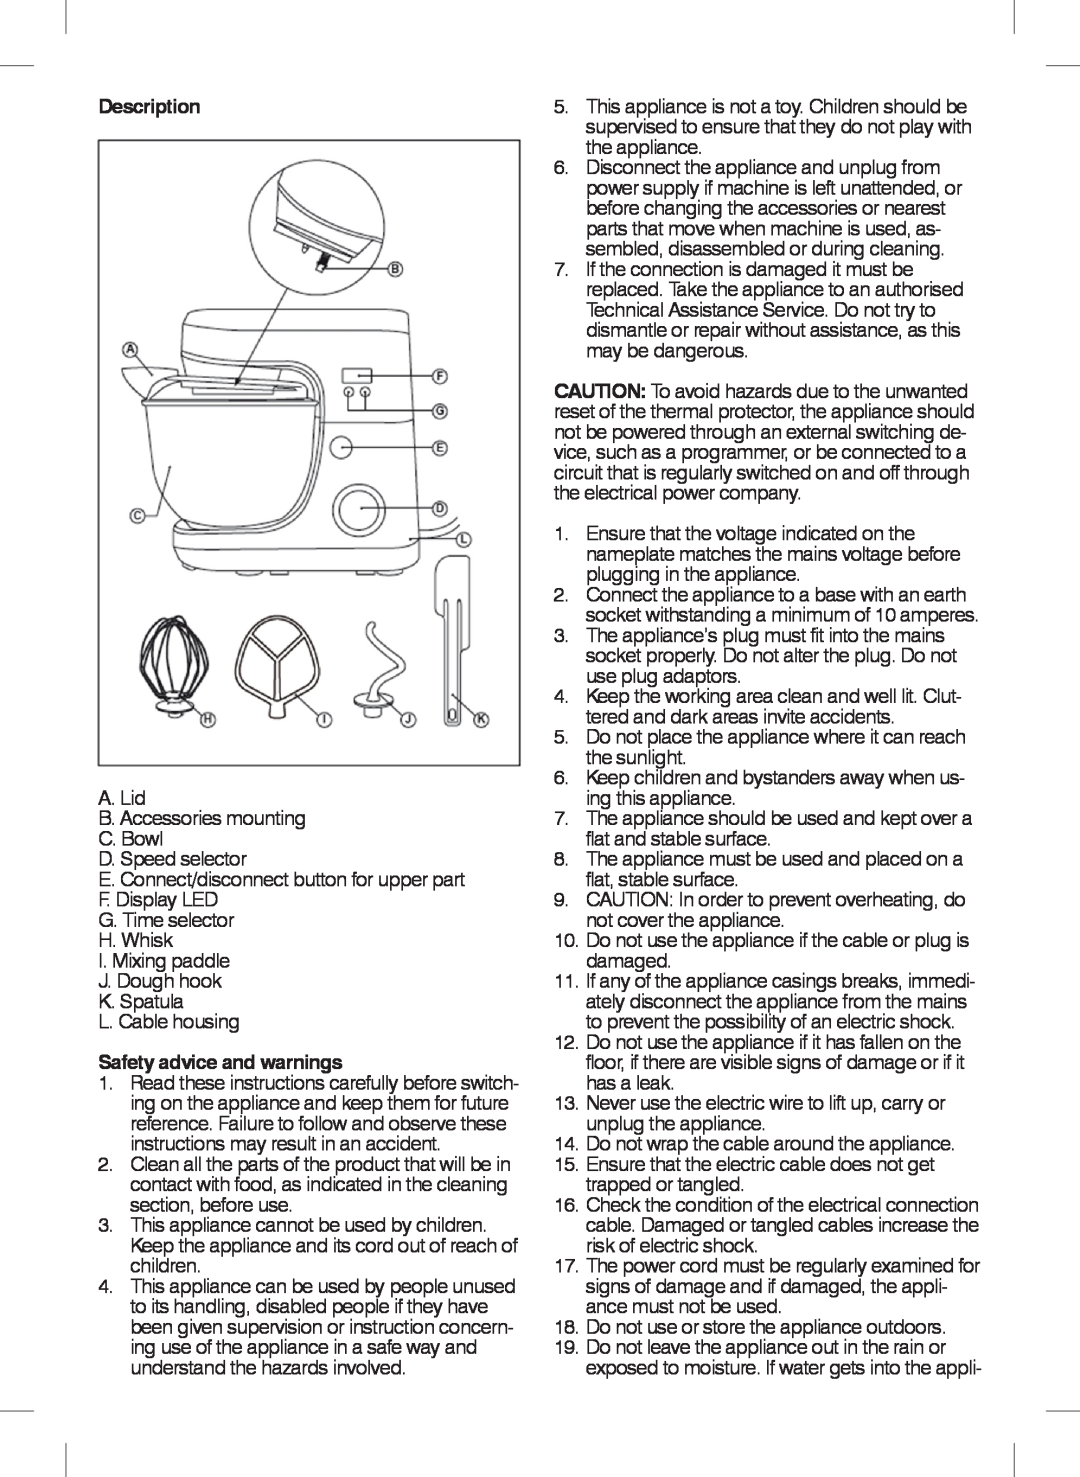 Mellerware 2650DA manual Description, Safety advice and warnings 